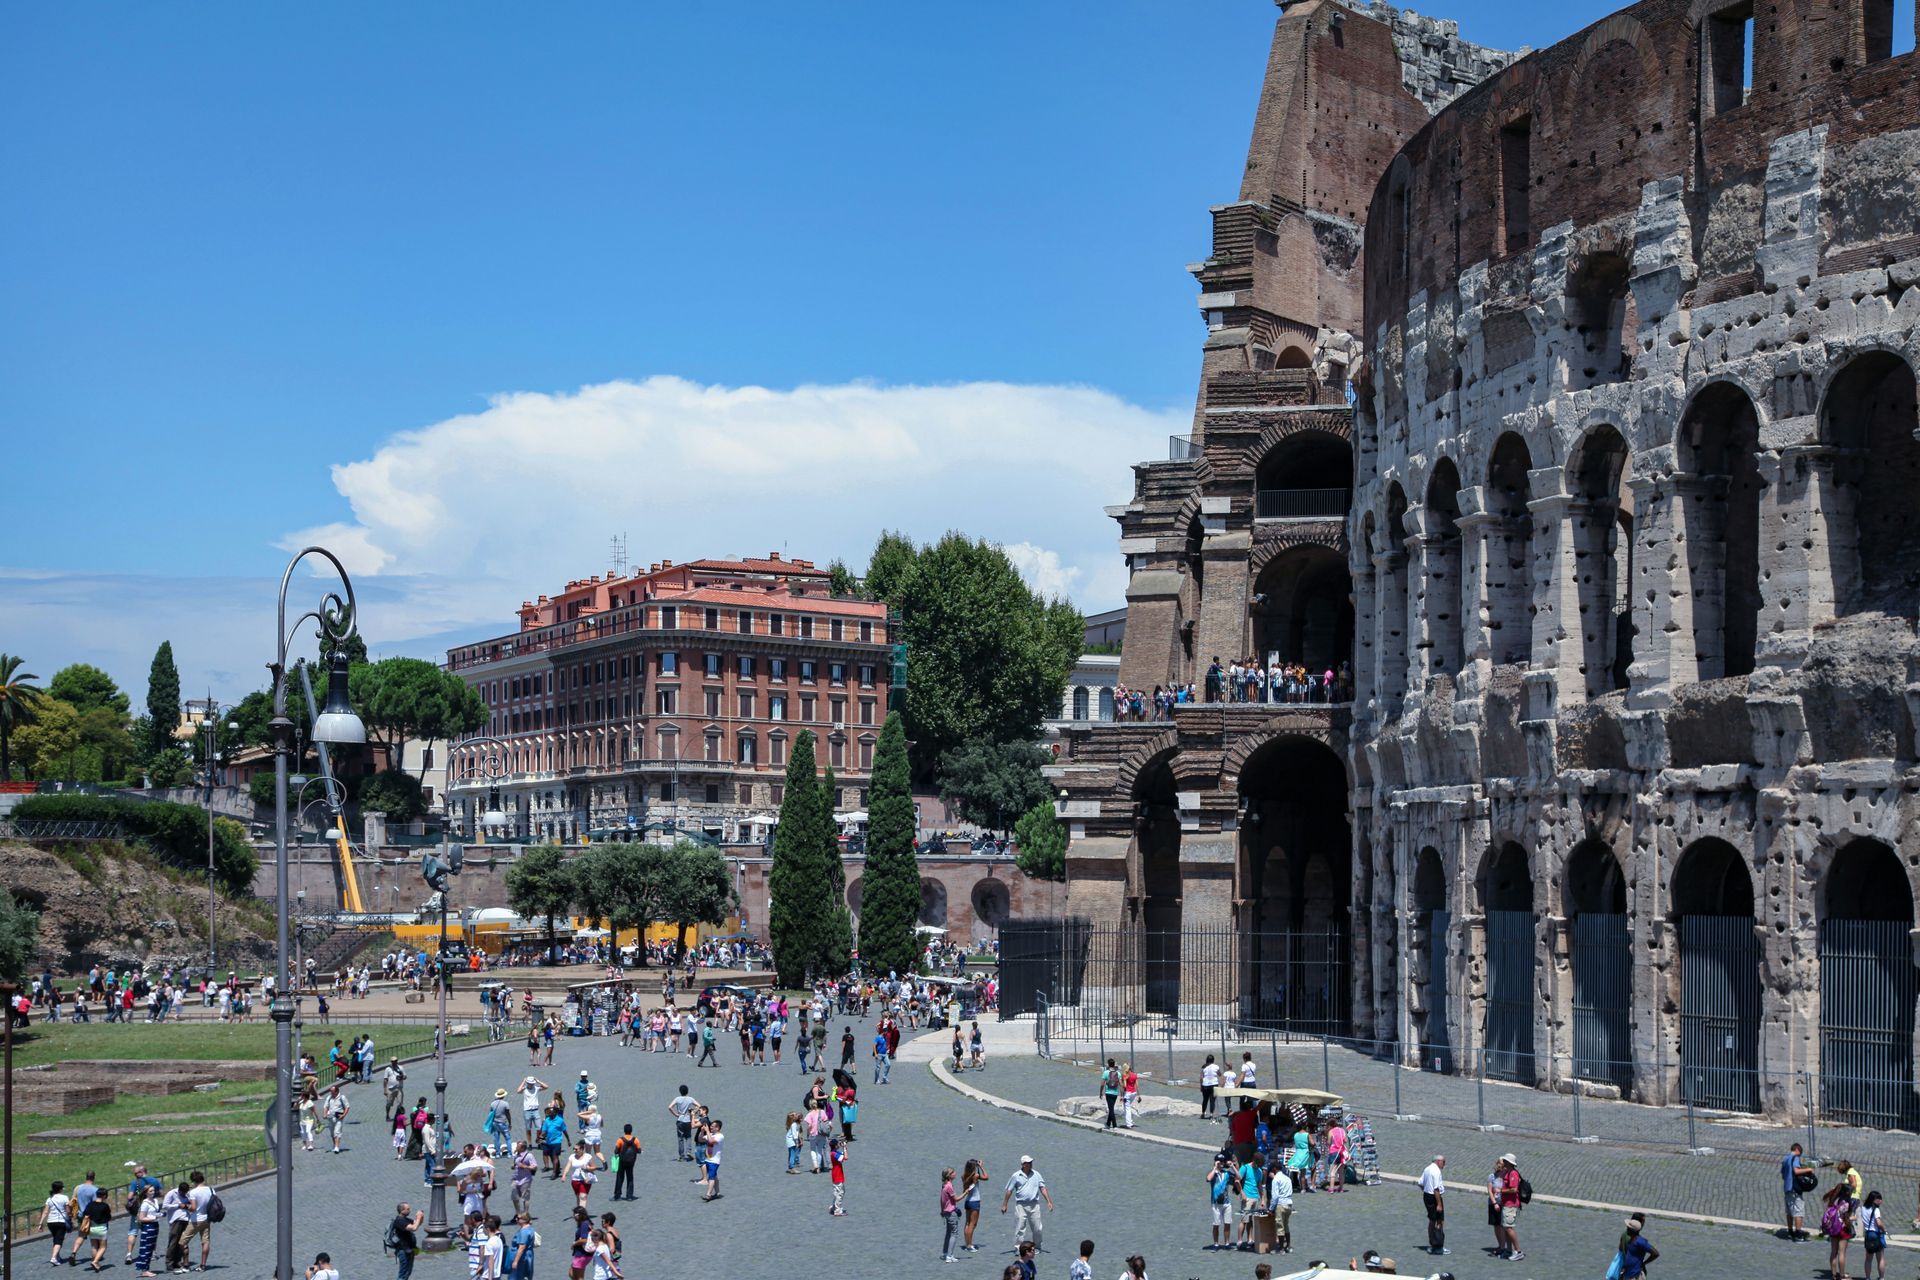 How to reach the Colosseum